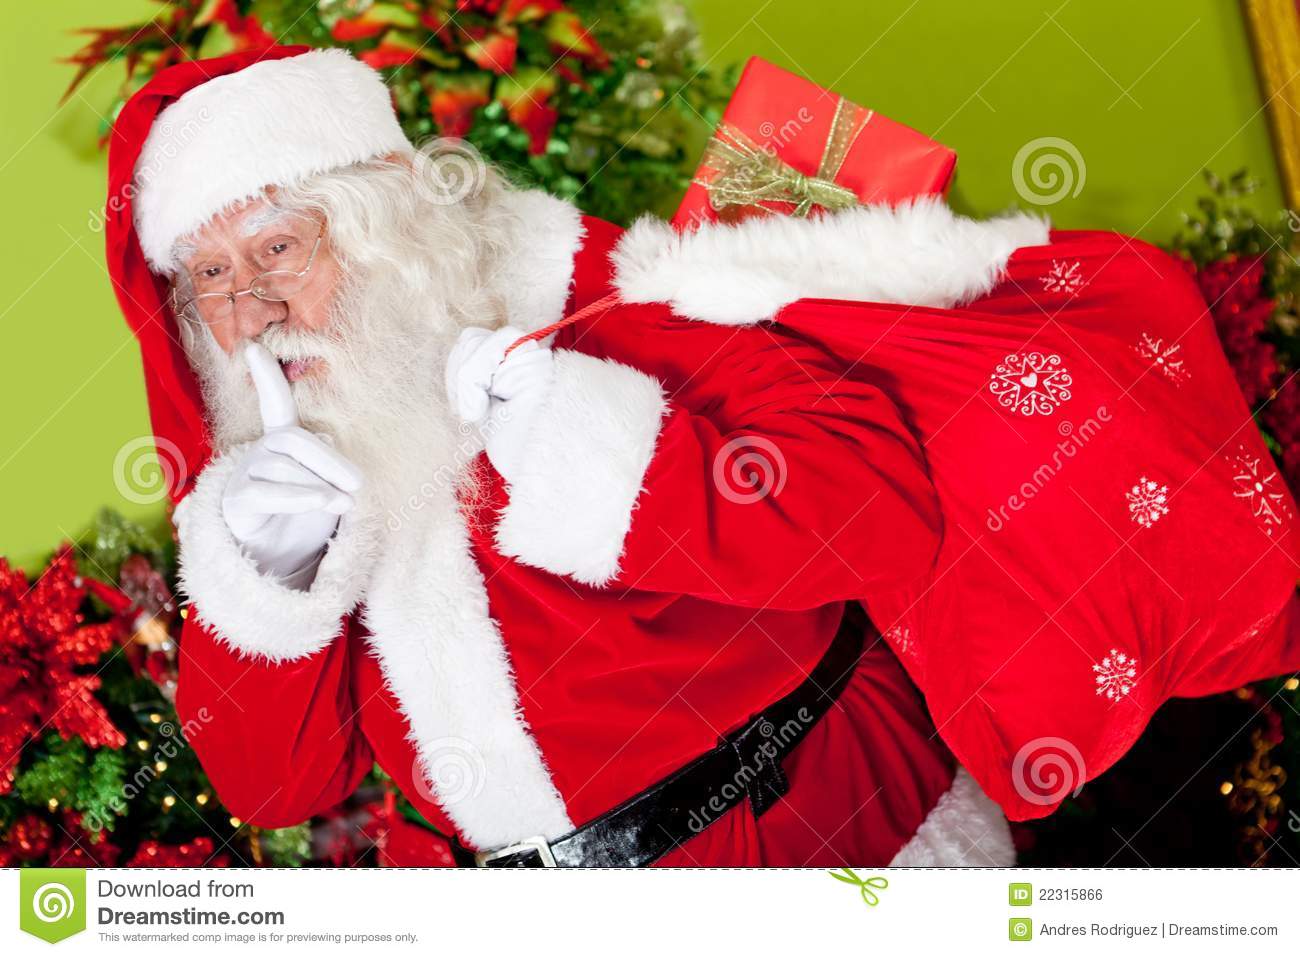 Santa Breaking In Royalty Free Stock Image   Image  22315866